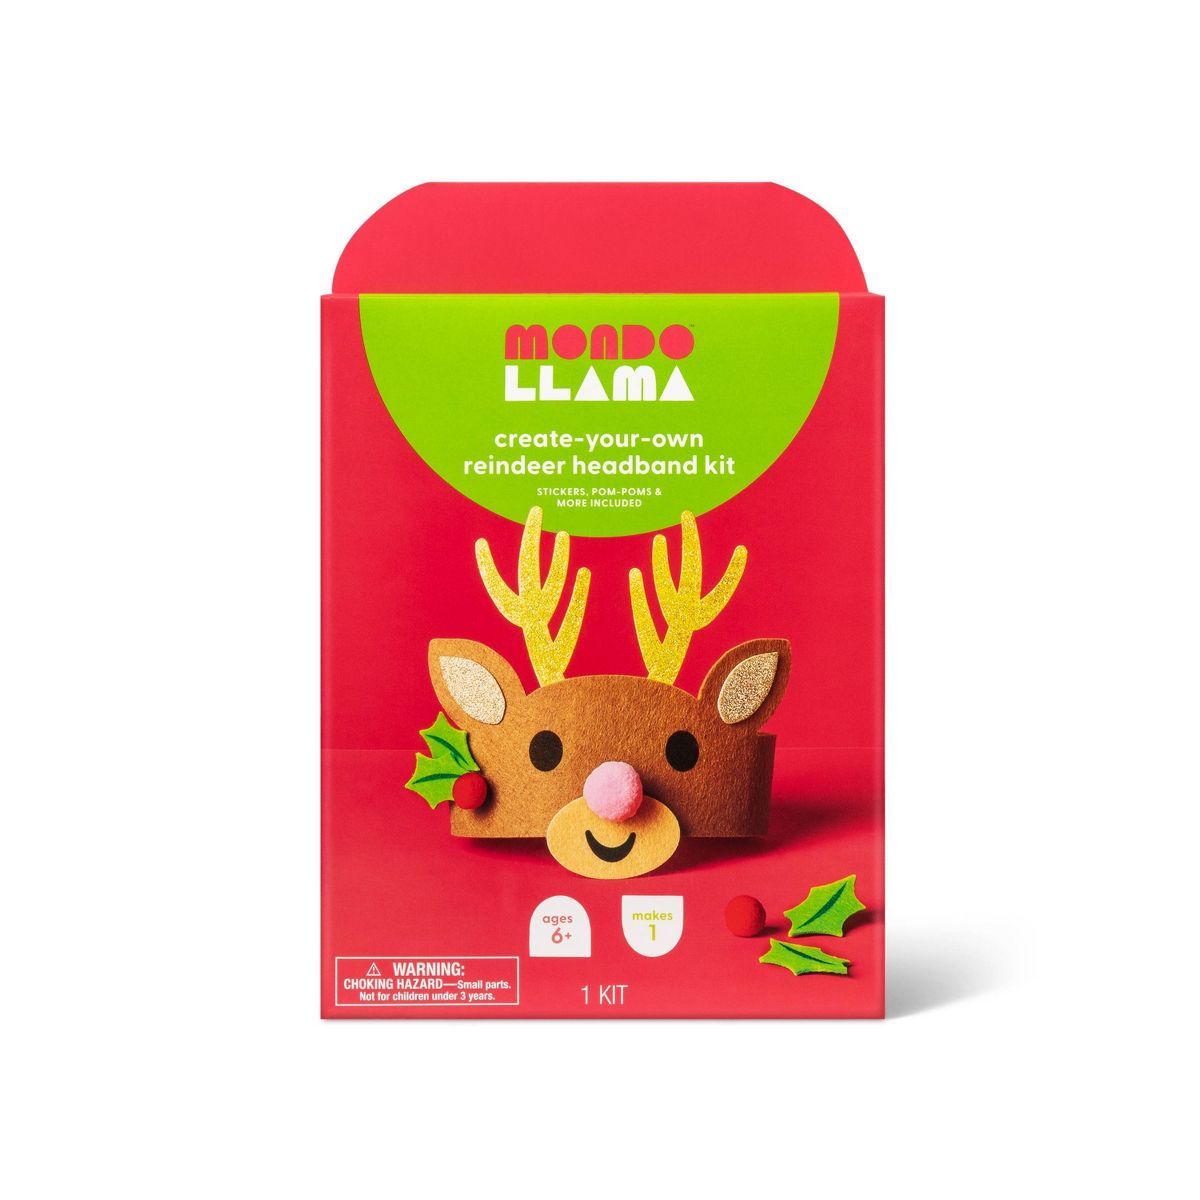 Create-Your-Own Reindeer Headband Kit - Mondo Llama™ | Target